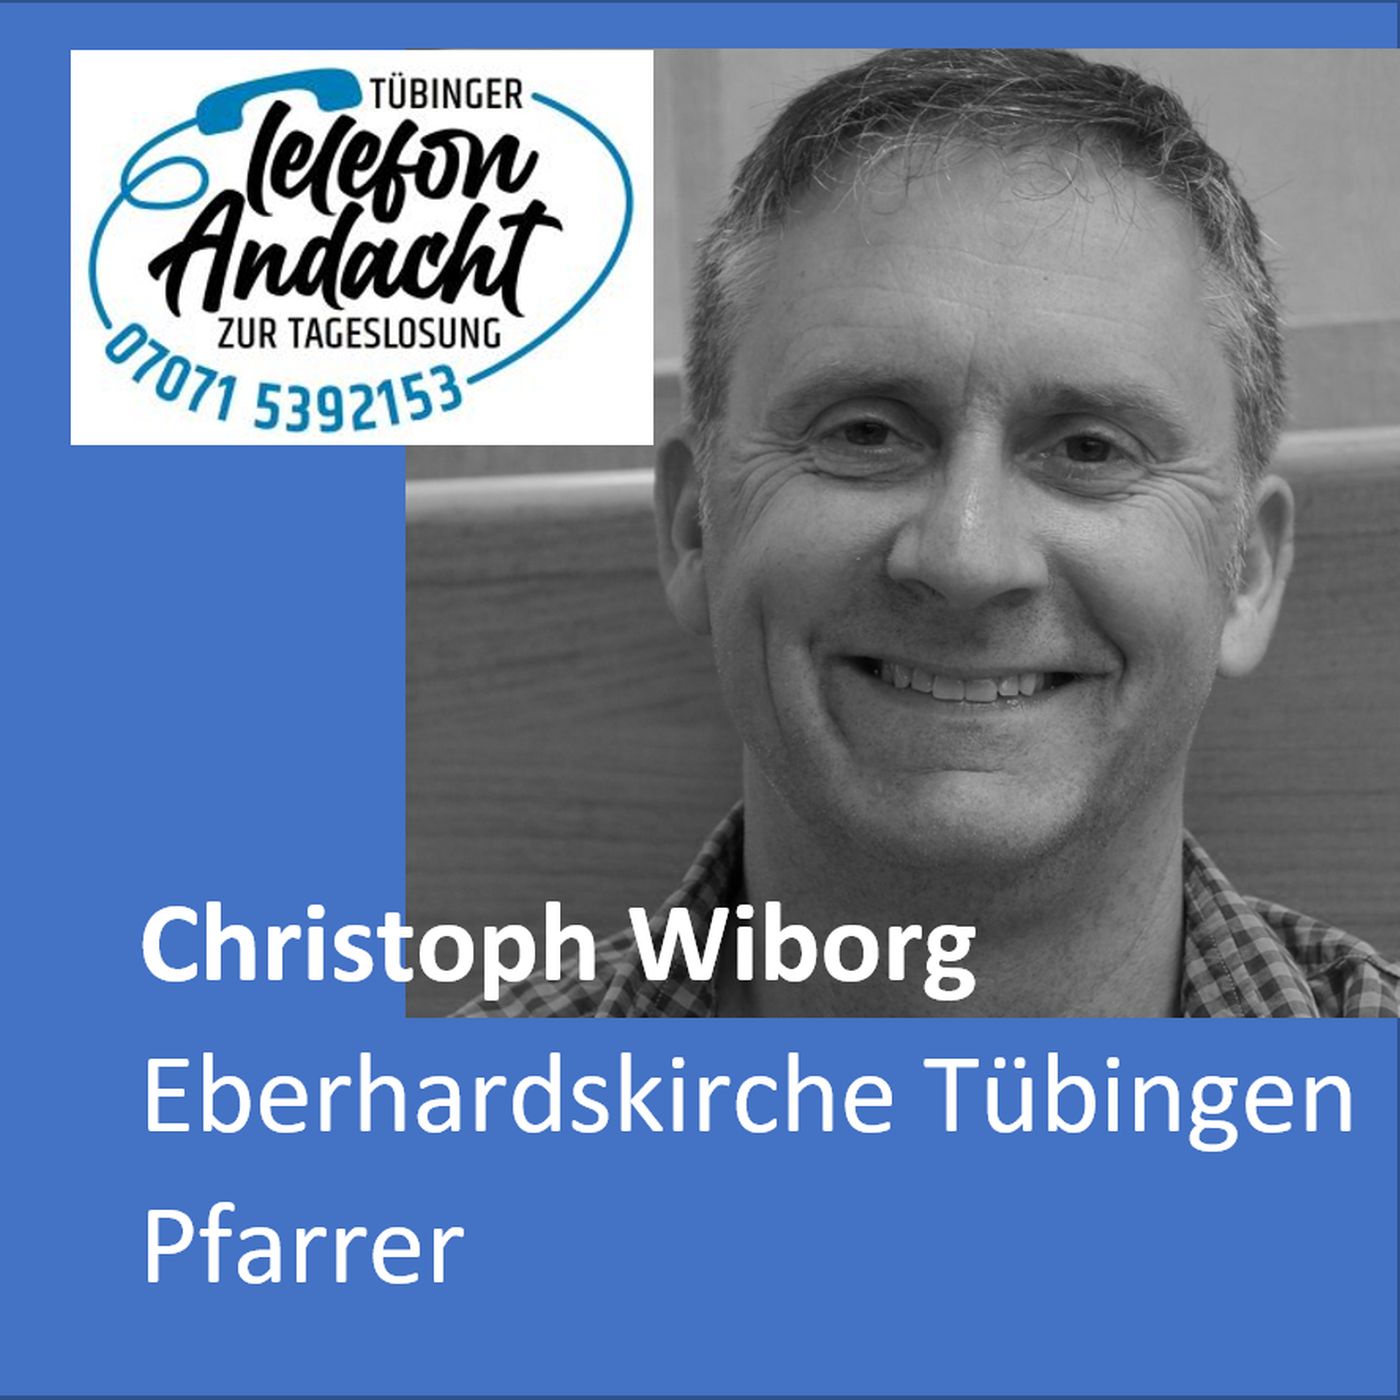 24 04 19 Christoph Wiborg